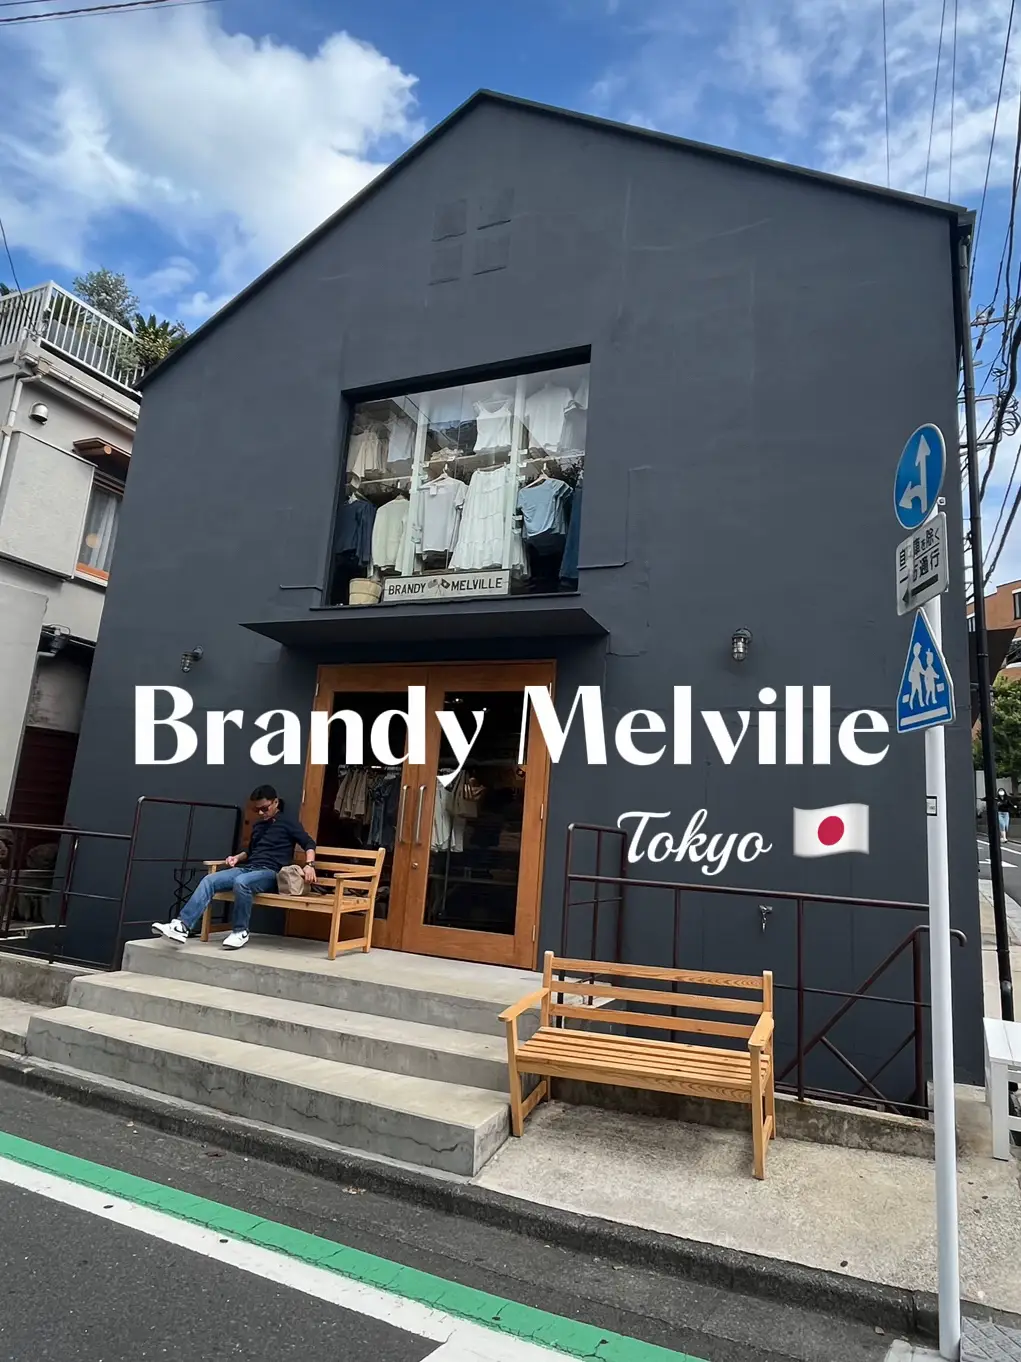 brandy melville tokyo 🇯🇵!!, Gallery posted by cheyenne ♡